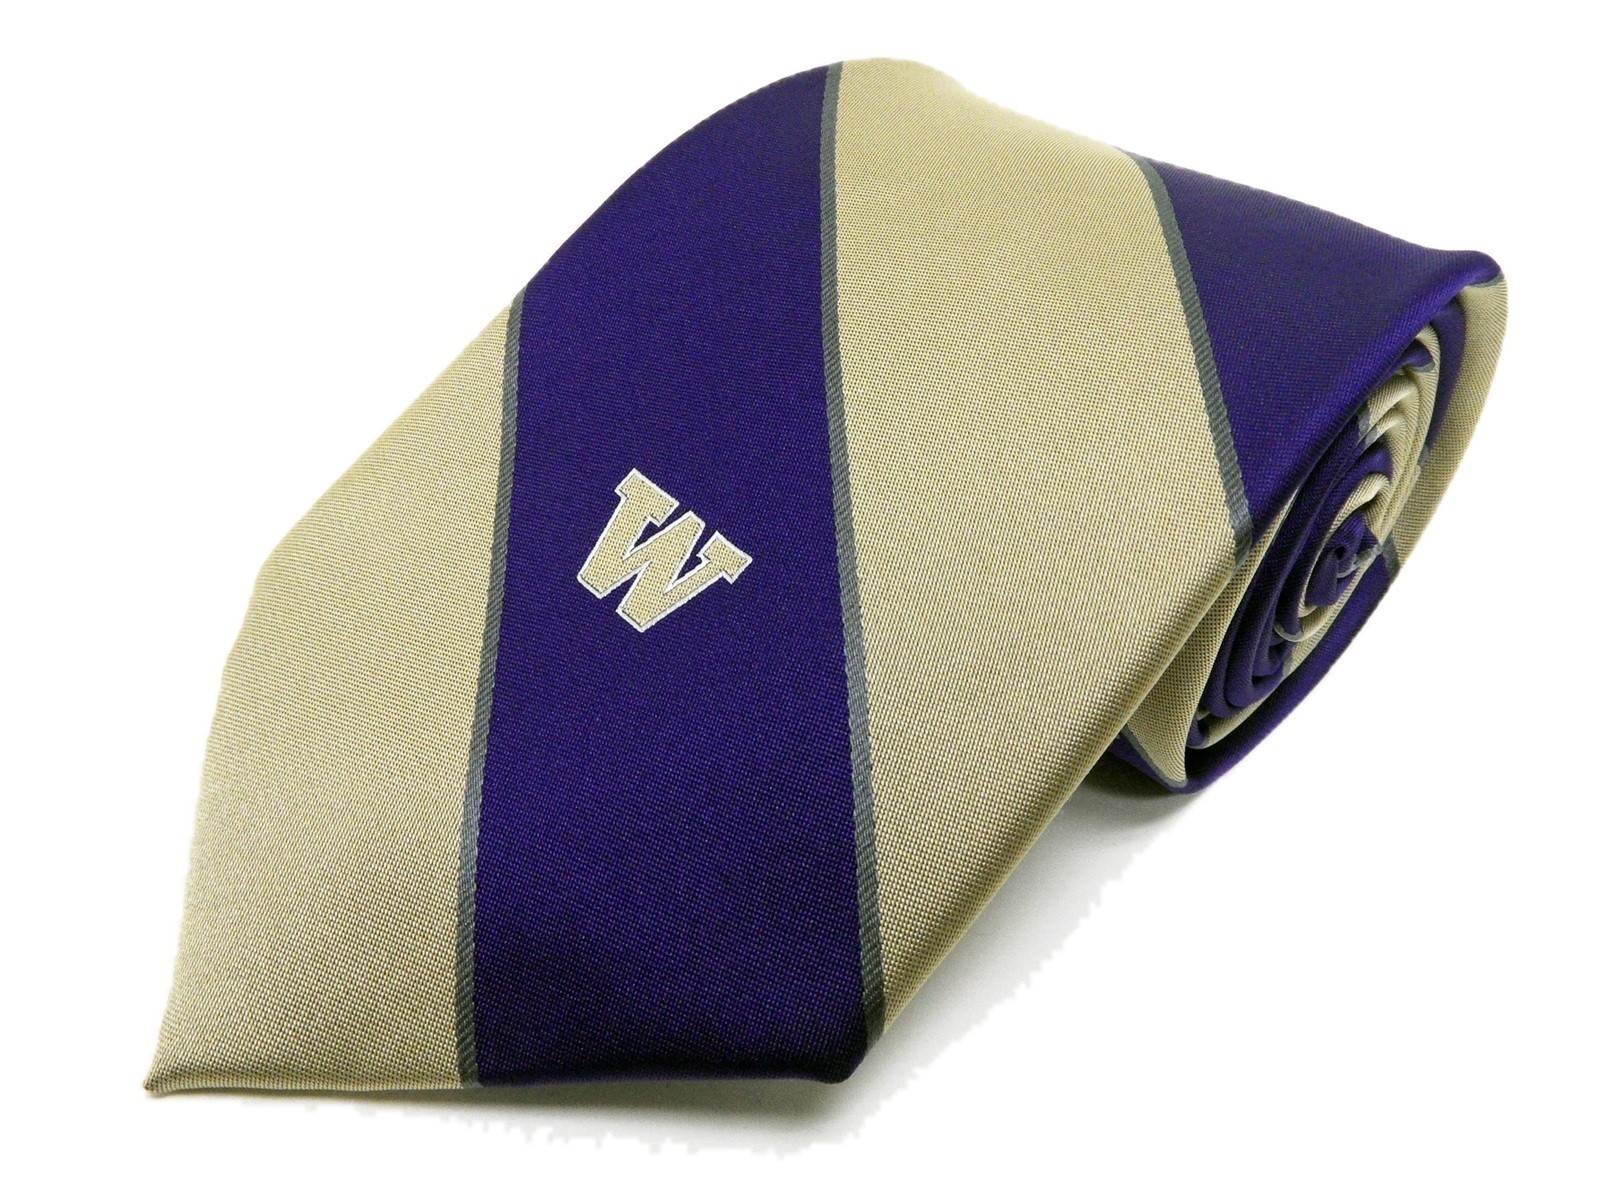 University of Washington Huskies Licensed Striped Necktie - $22.95